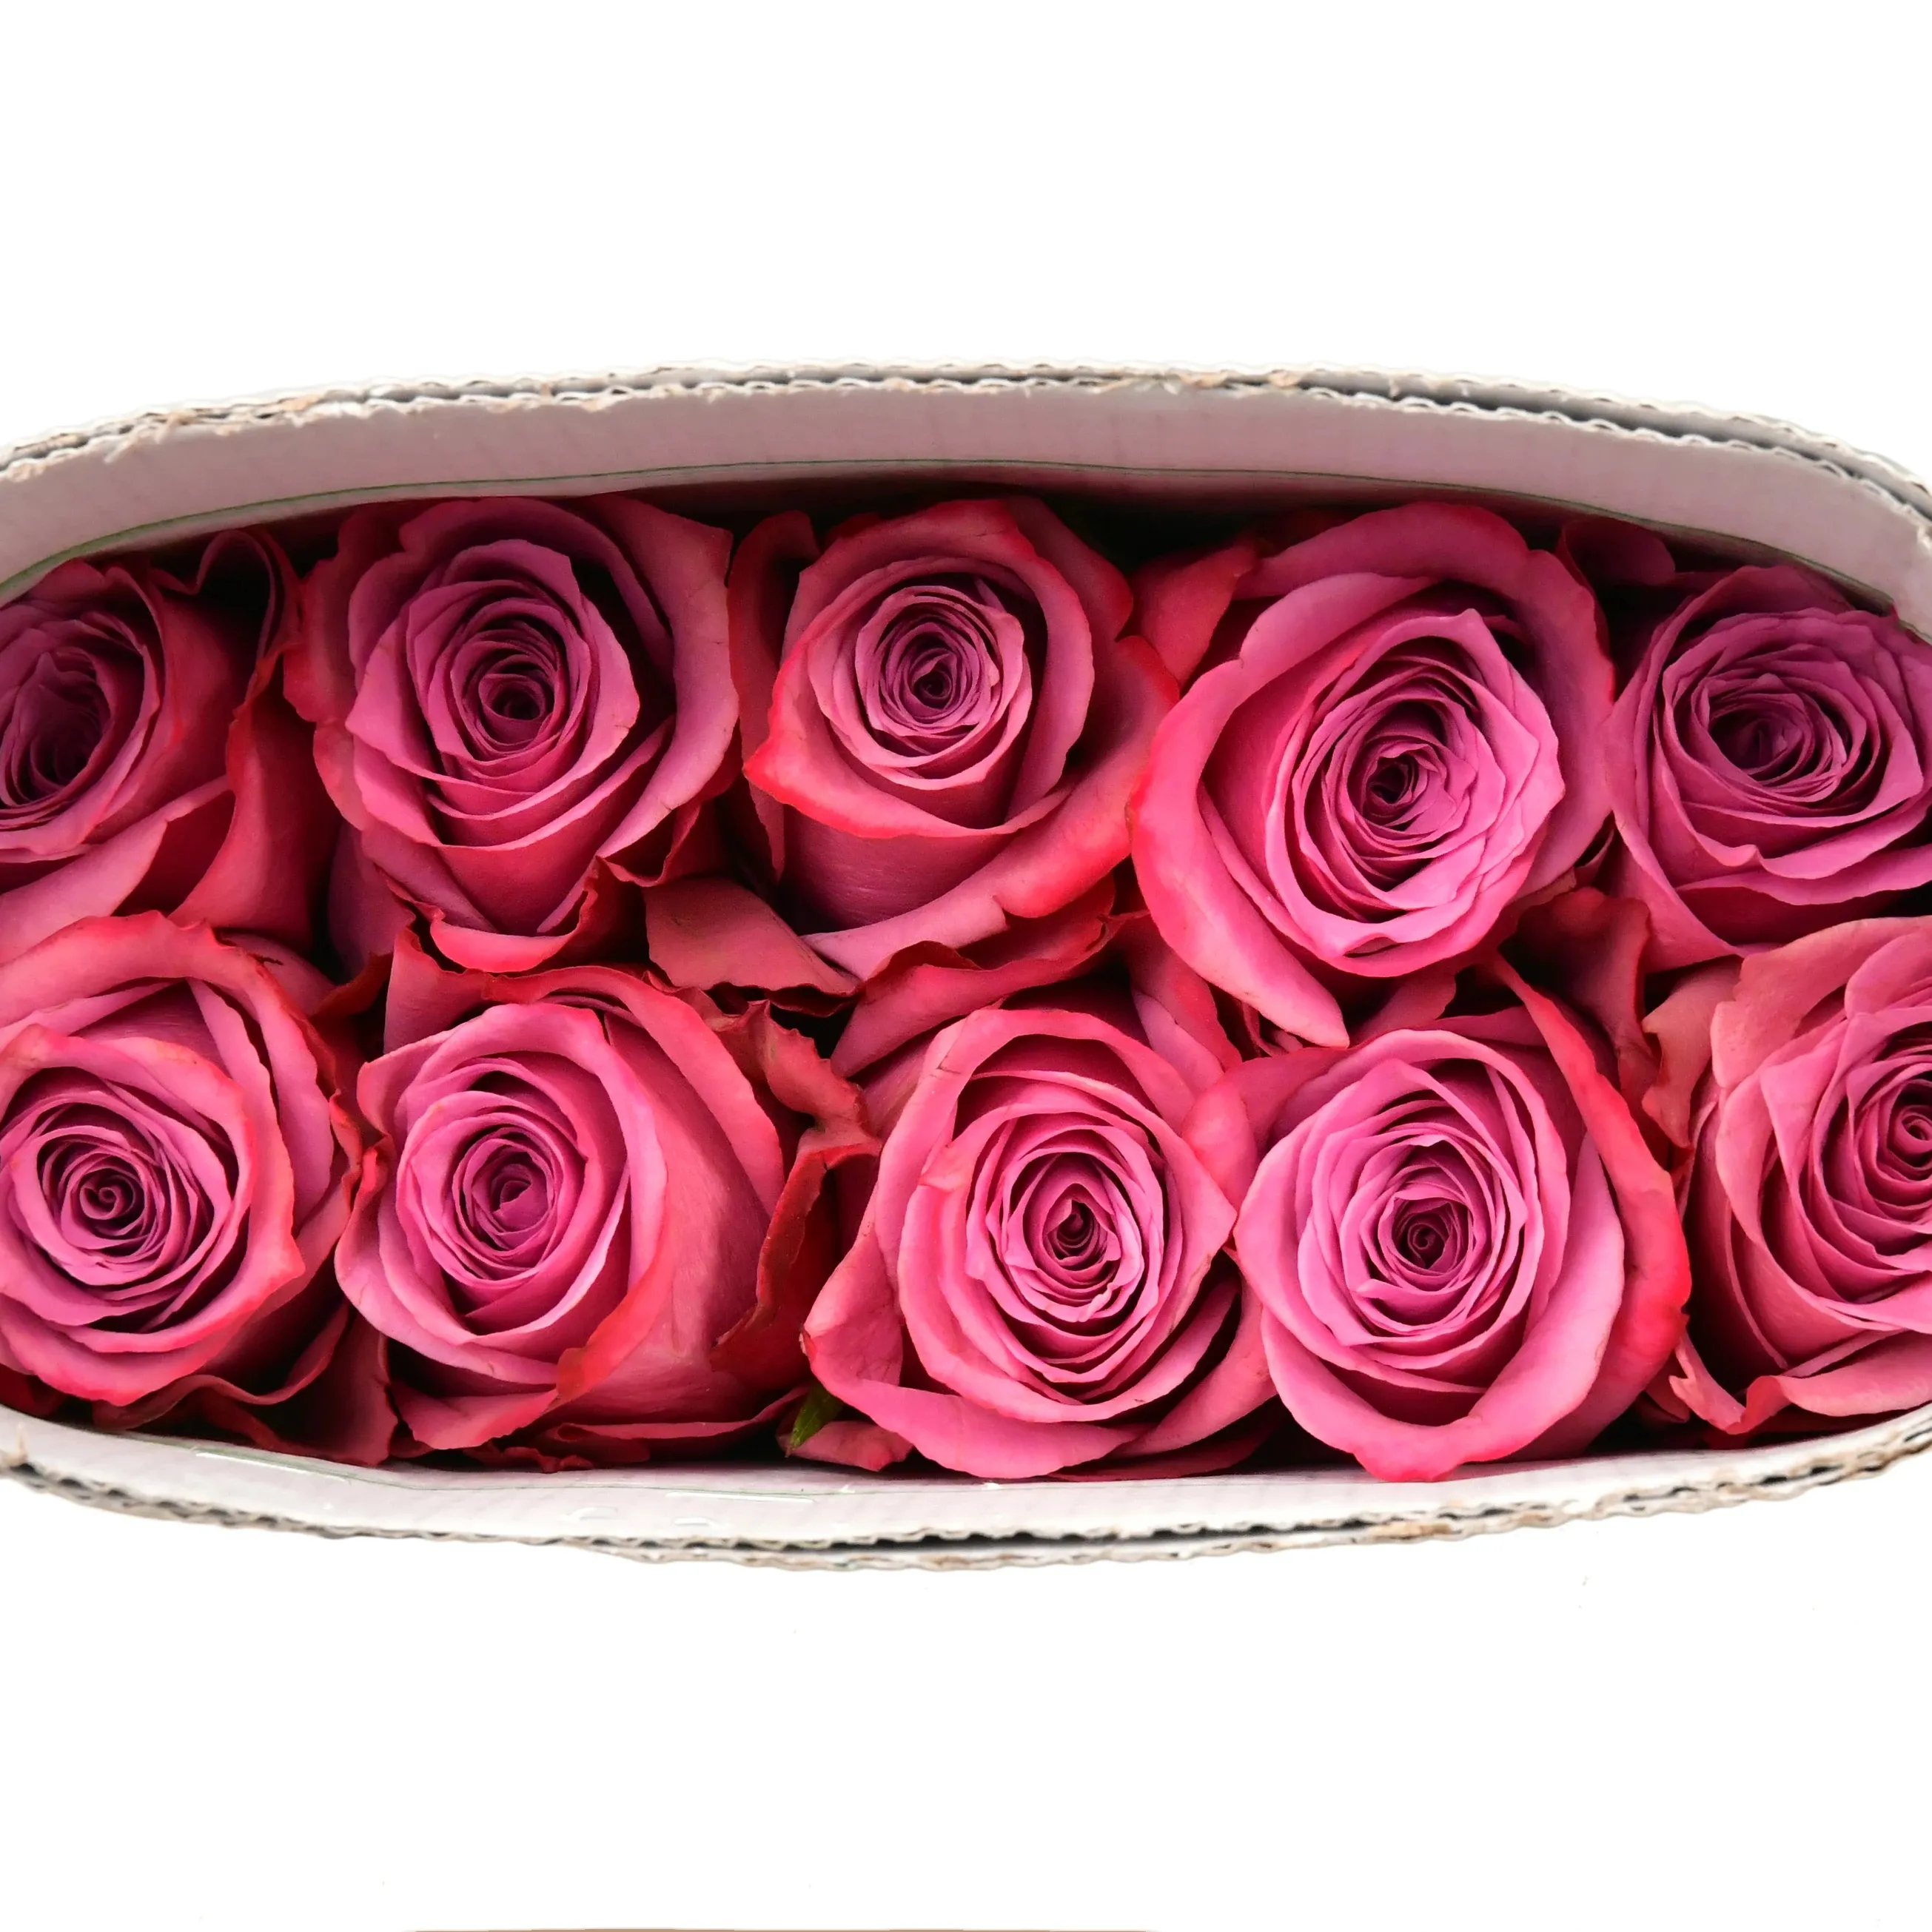 Flores frescas de corte novo Premium Queniano corte fresco rosa roxo haste grande 62 cm atacado flor fresca de varejo